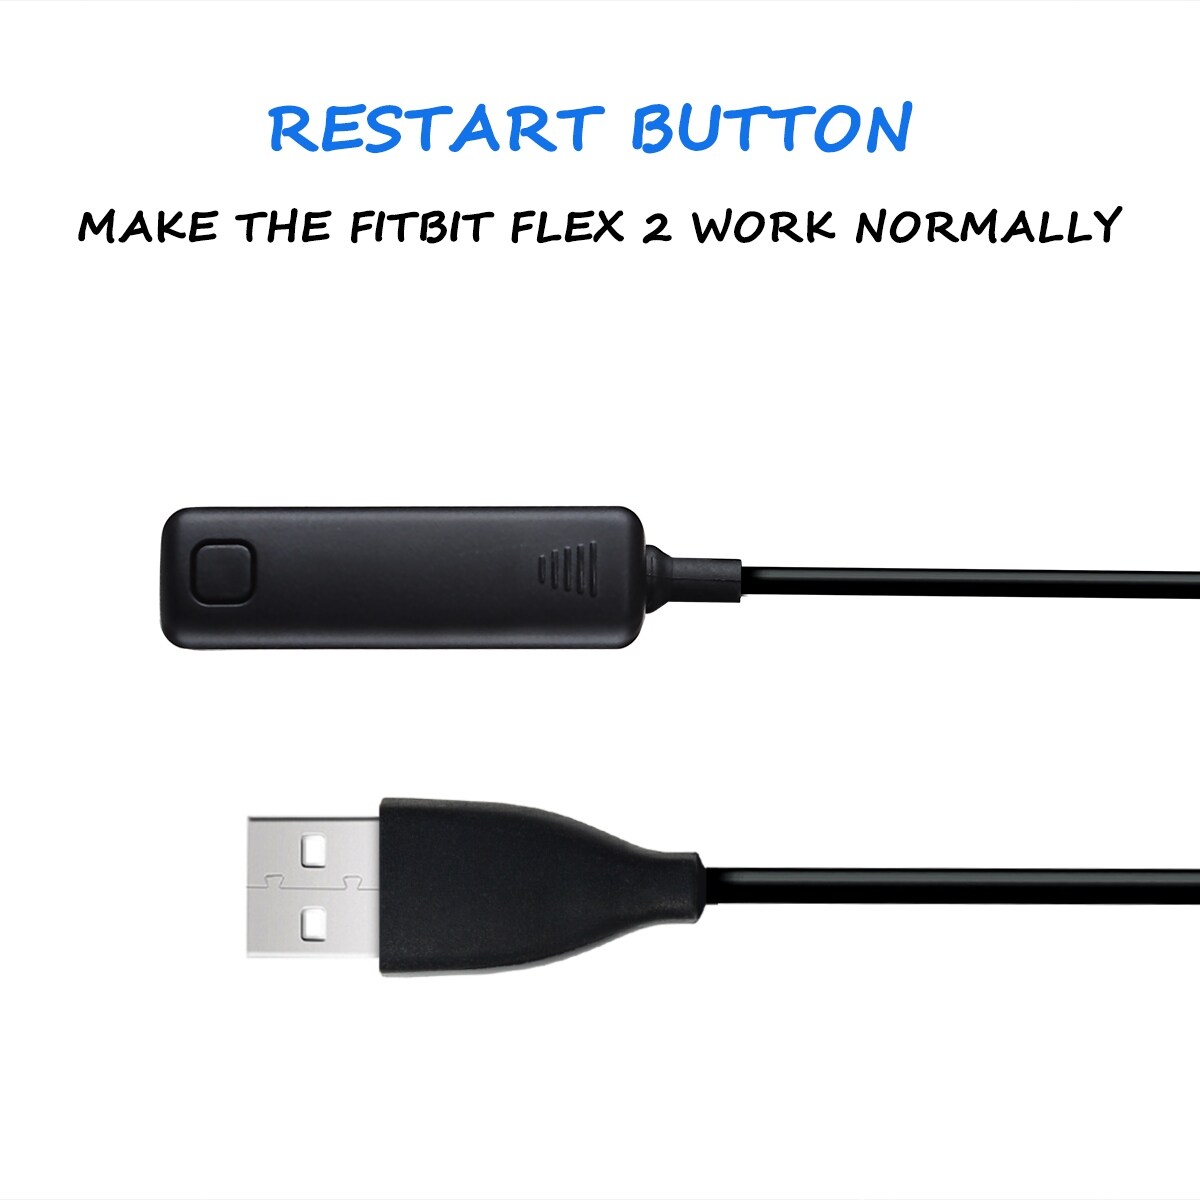 fitbit flex 2 restart